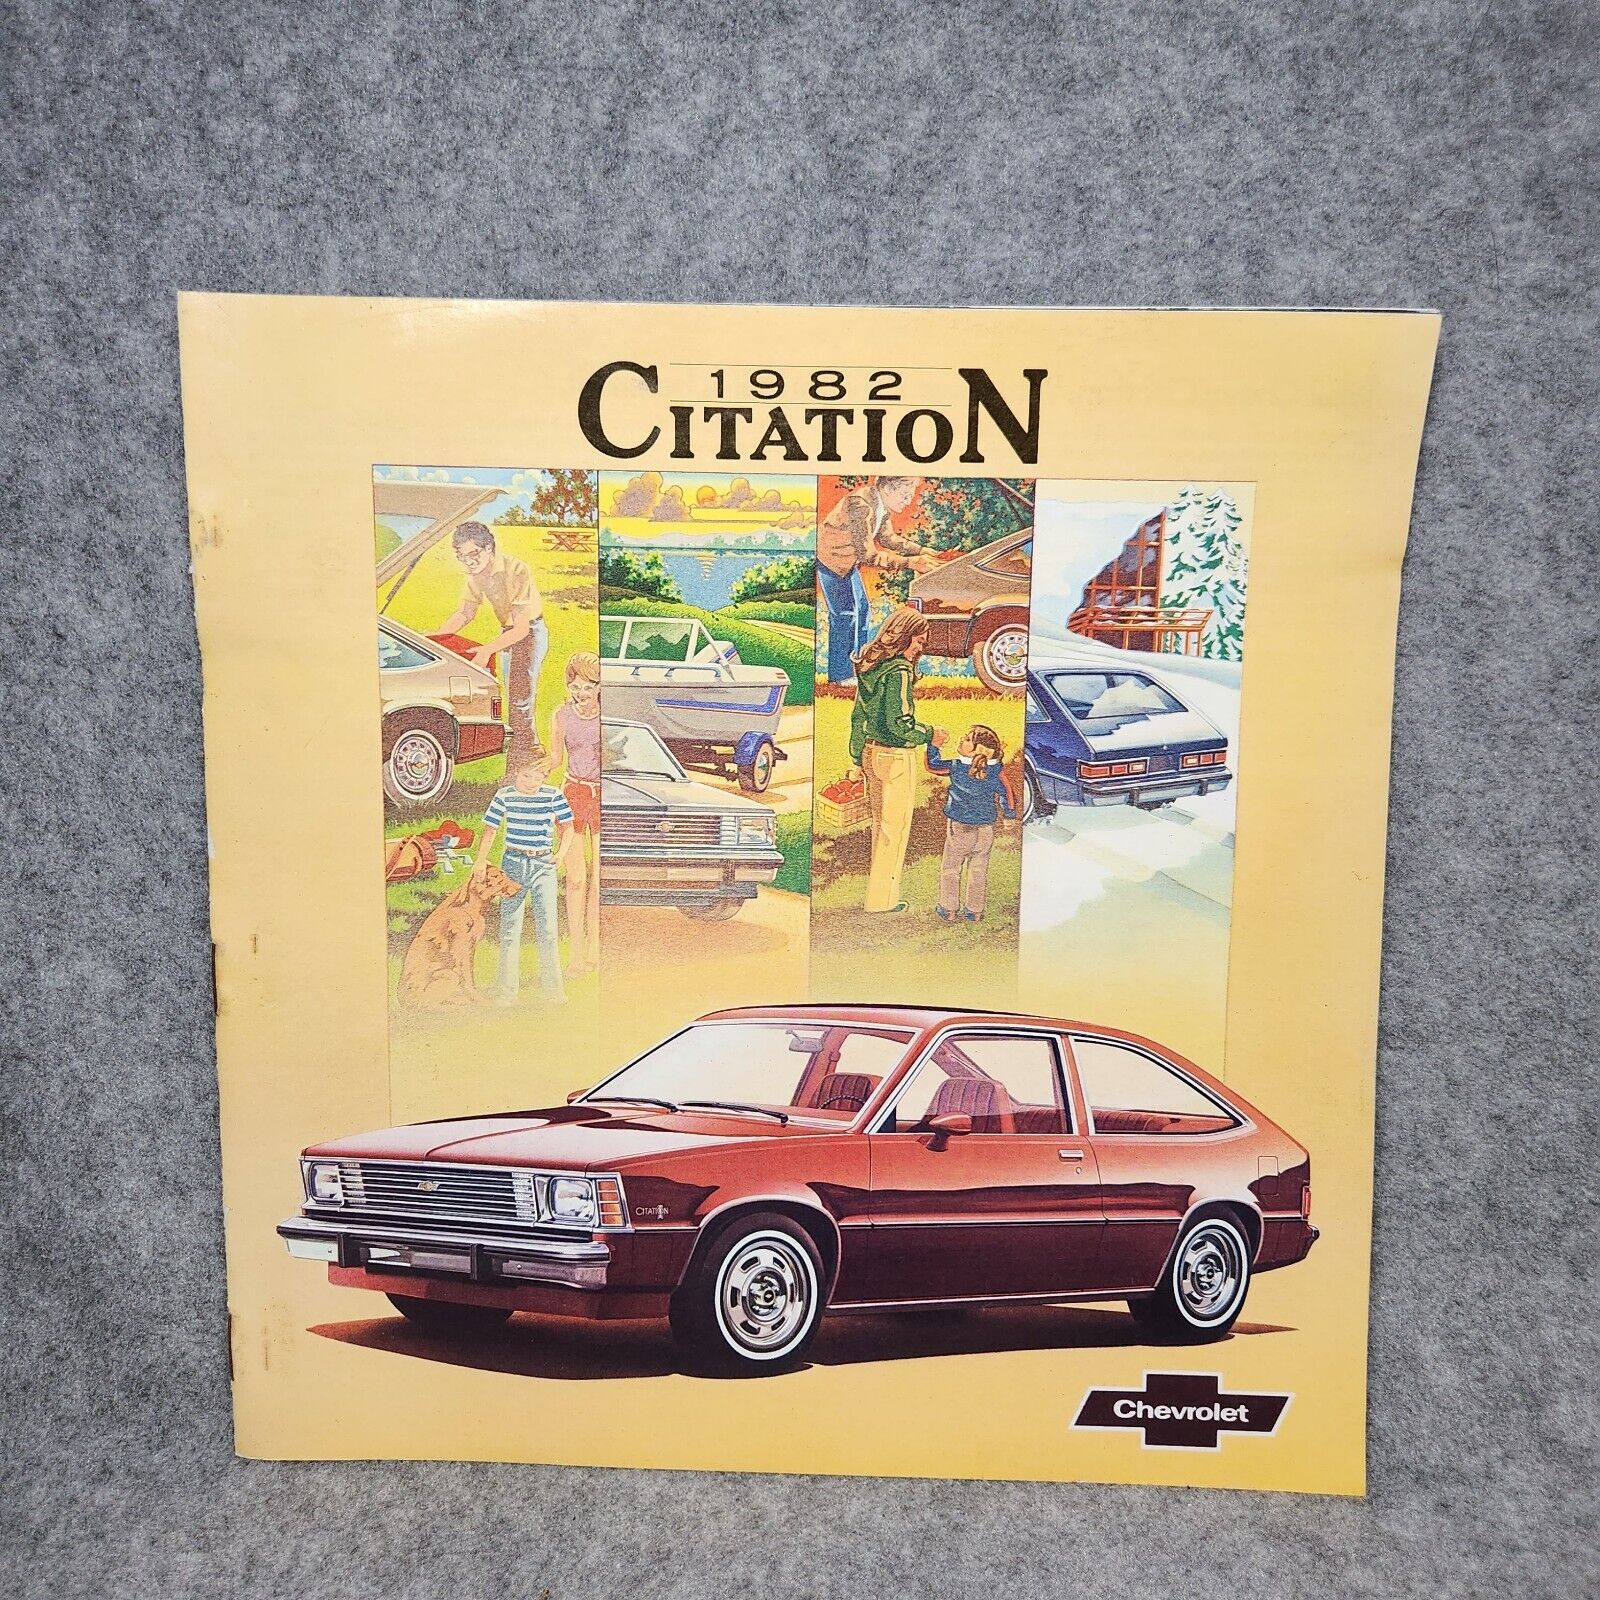 Vintage 1982 Chevrolet Citation Sales Brochure